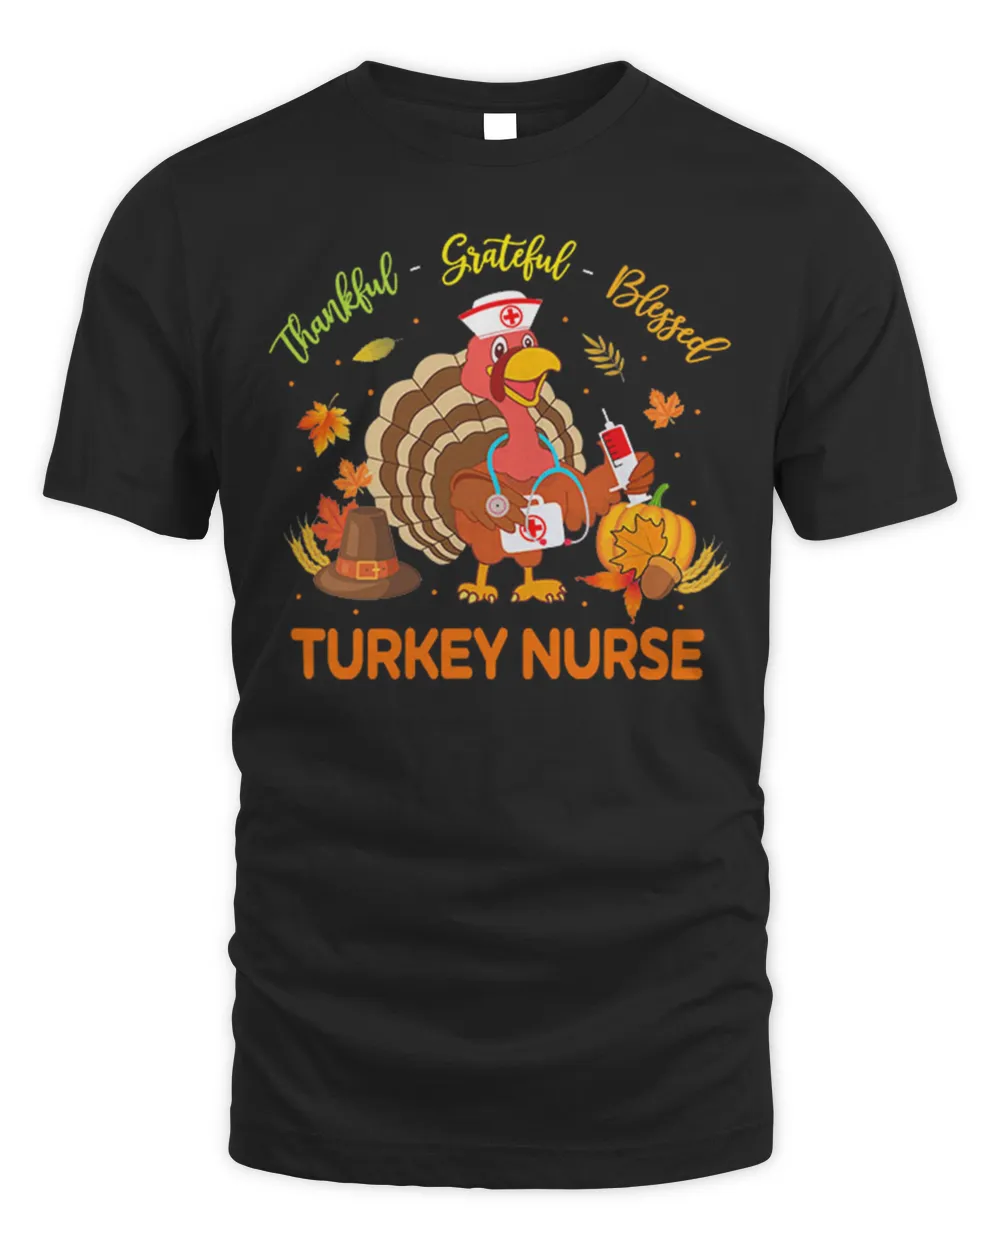 Thankful Grateful Blessed Turkey Nurse Shirt